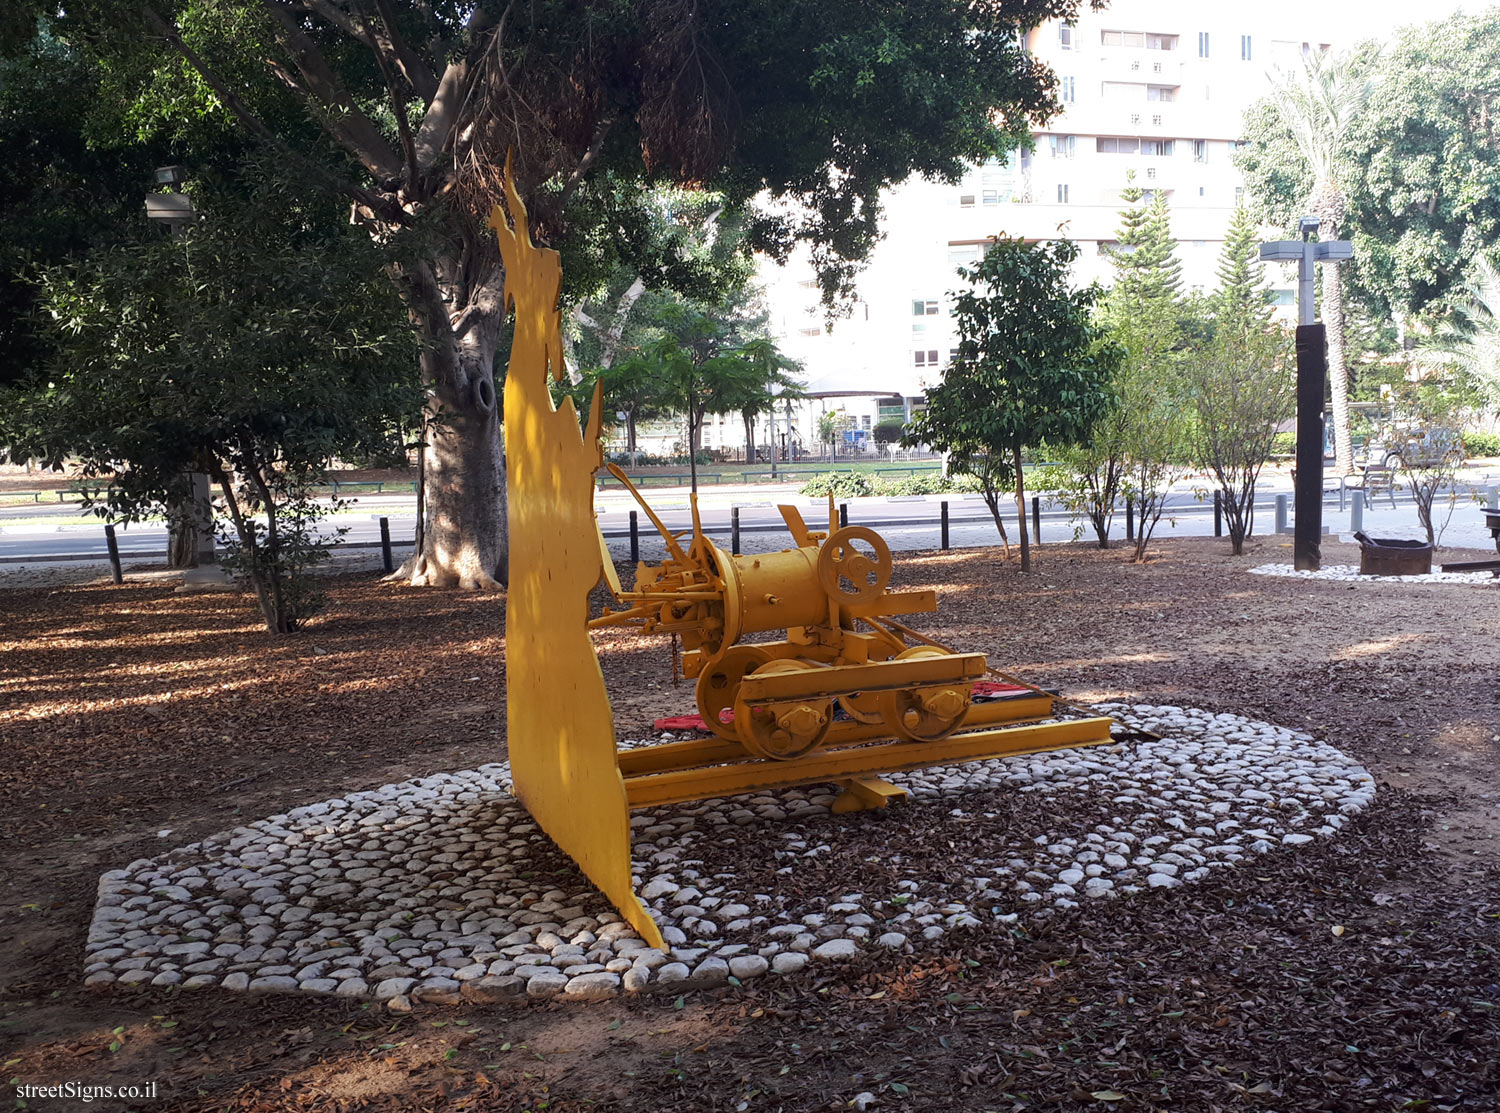 Tel Aviv - Tomarkin sculptures at Abu Nabot Park - Witches Sabbath